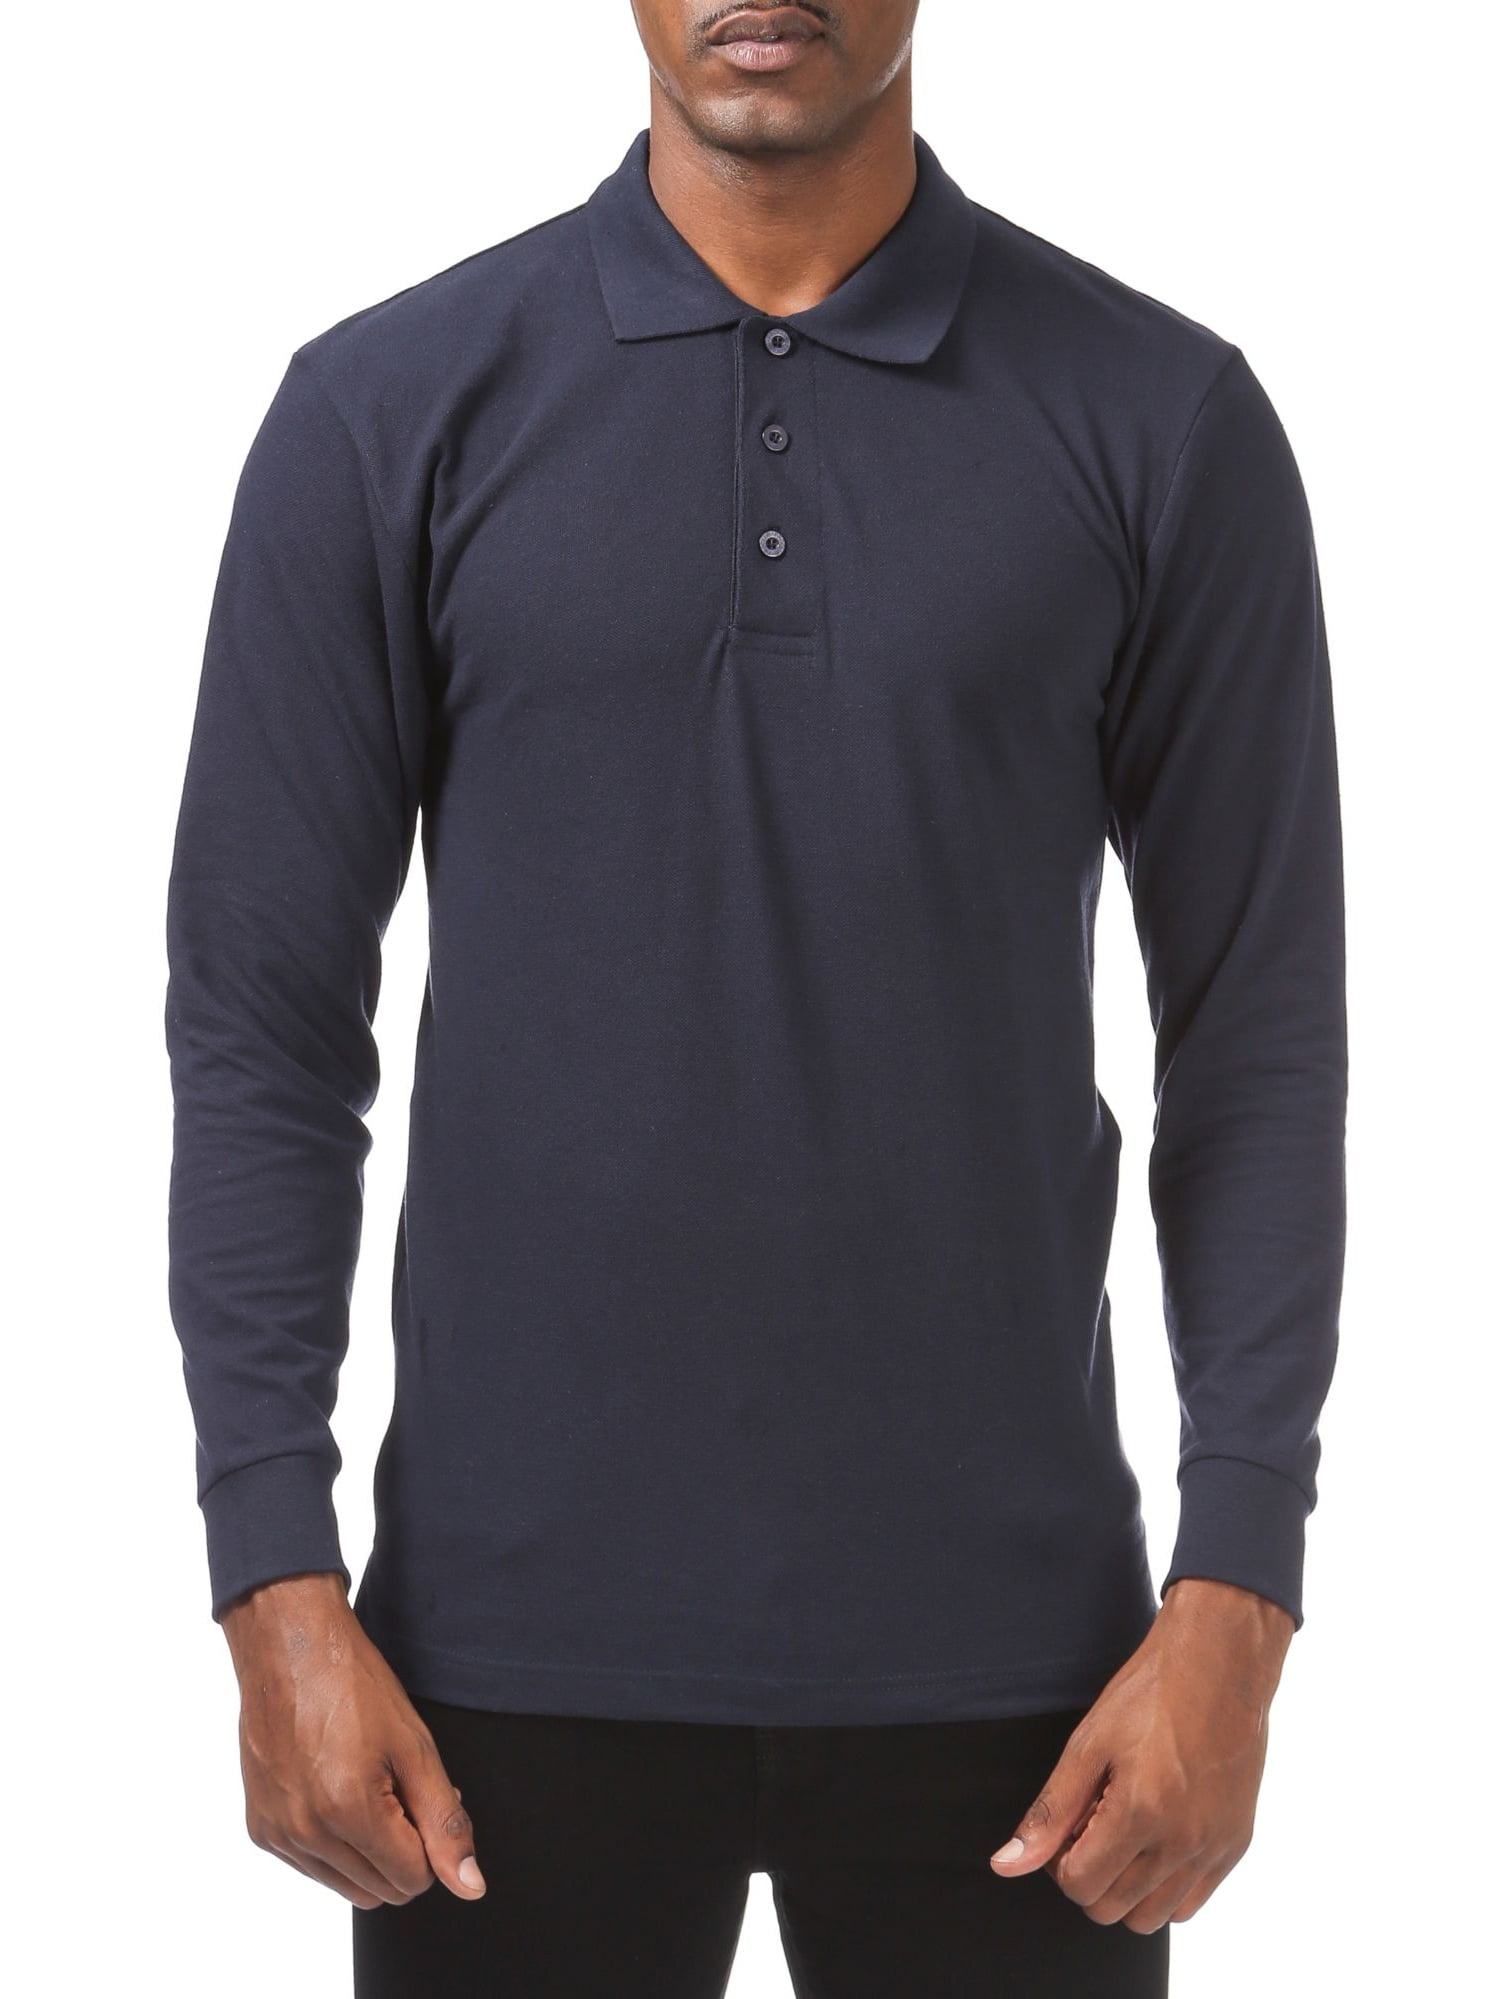 Pro Club Men's Long Sleeve Pique Polo Shirt - Walmart.com